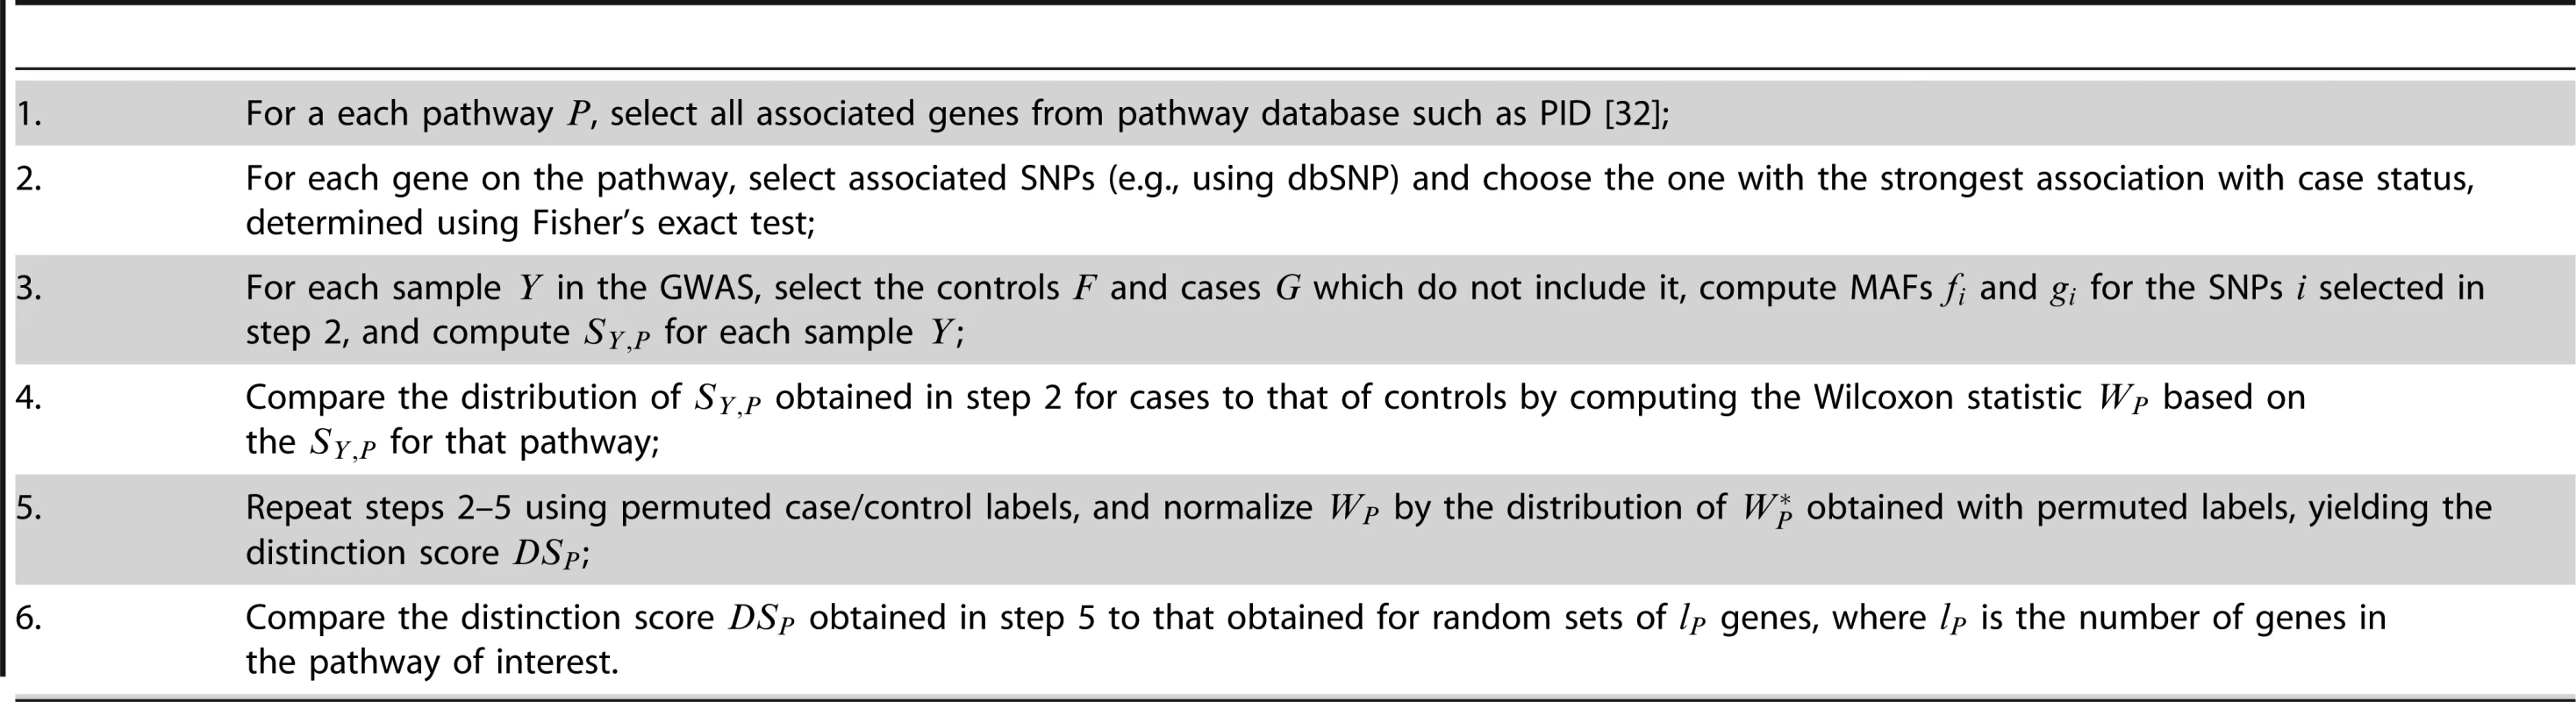 Procedure for Pathways of Distinction Analysis.